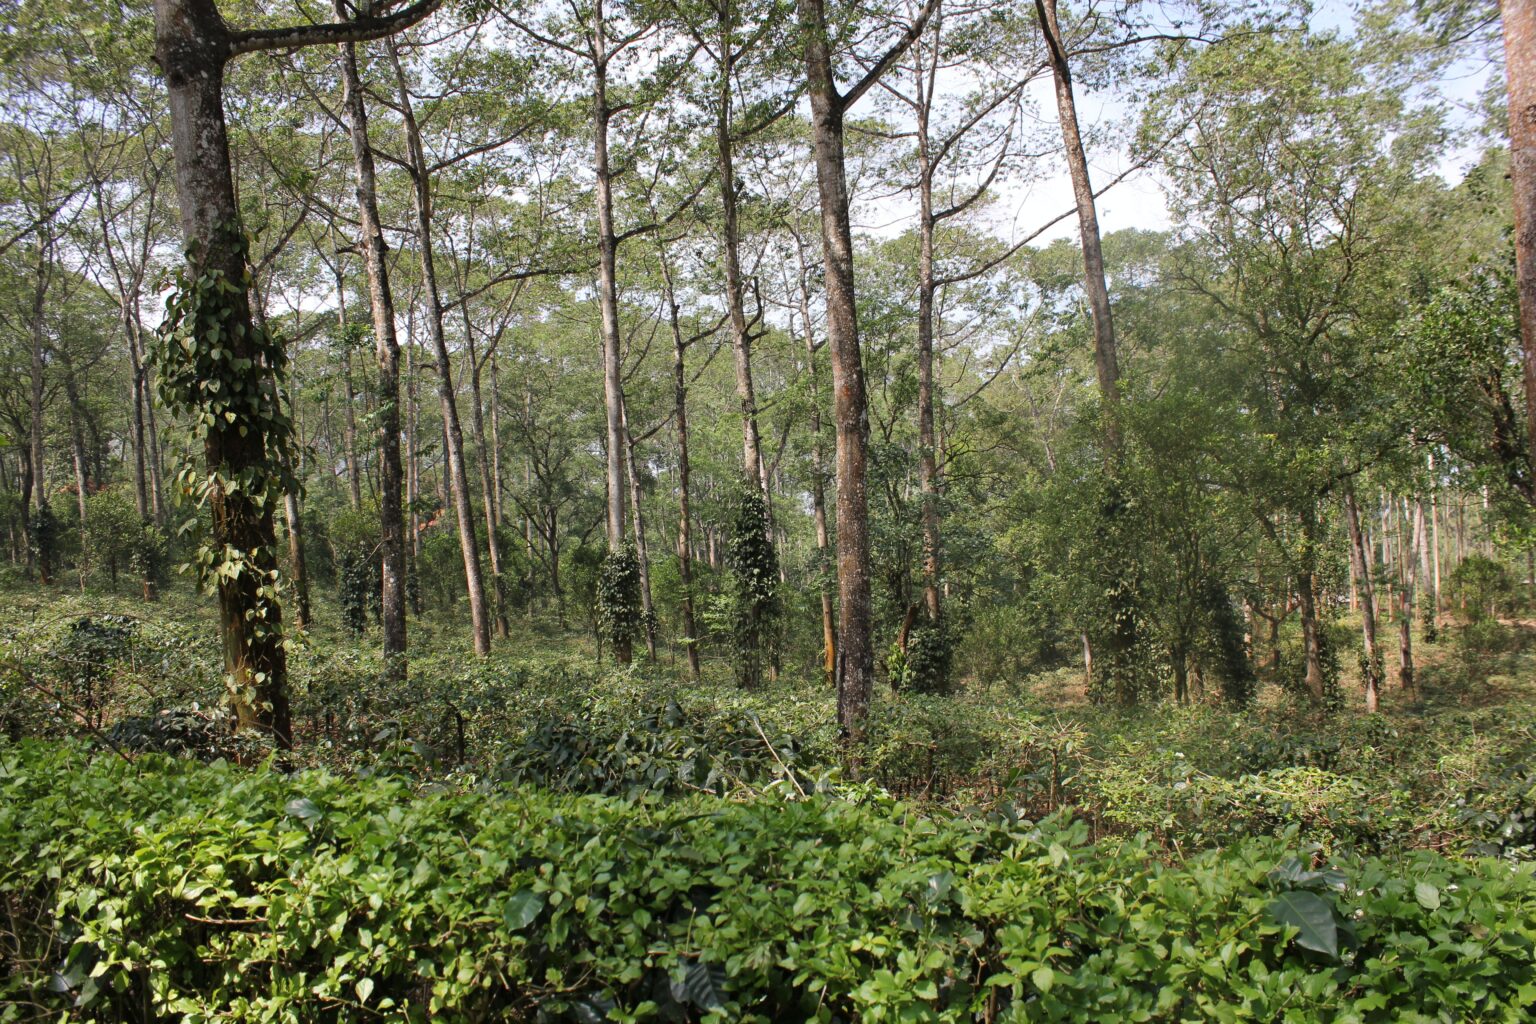 Coffee varieties S795, SLN9 and Chandragiri grow at Bettadamalali Estate in the Western Ghats